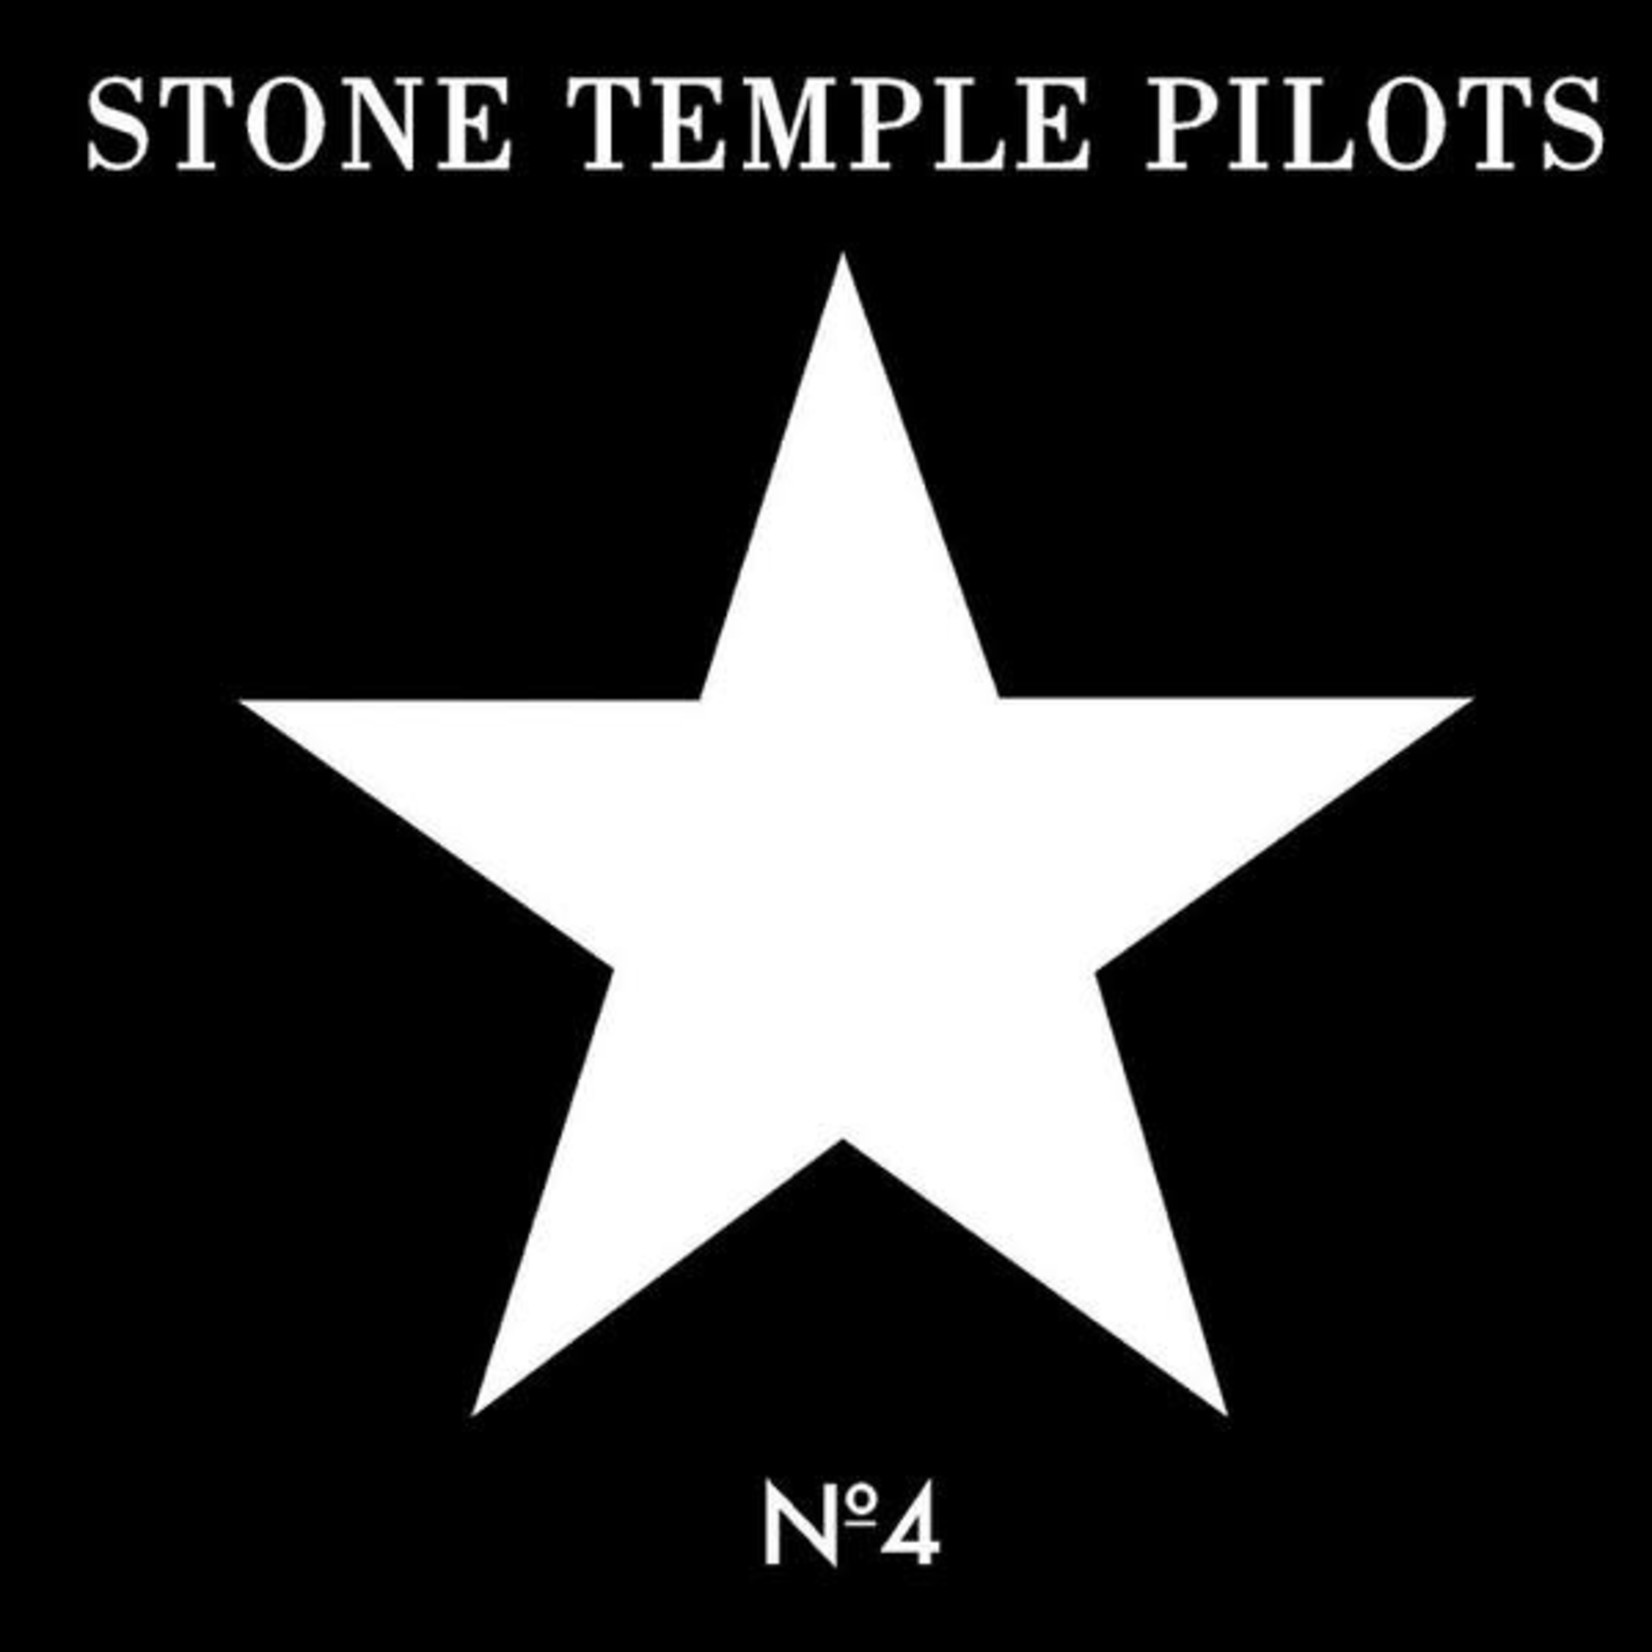 [New] Stone Temple Pilots - No. 4